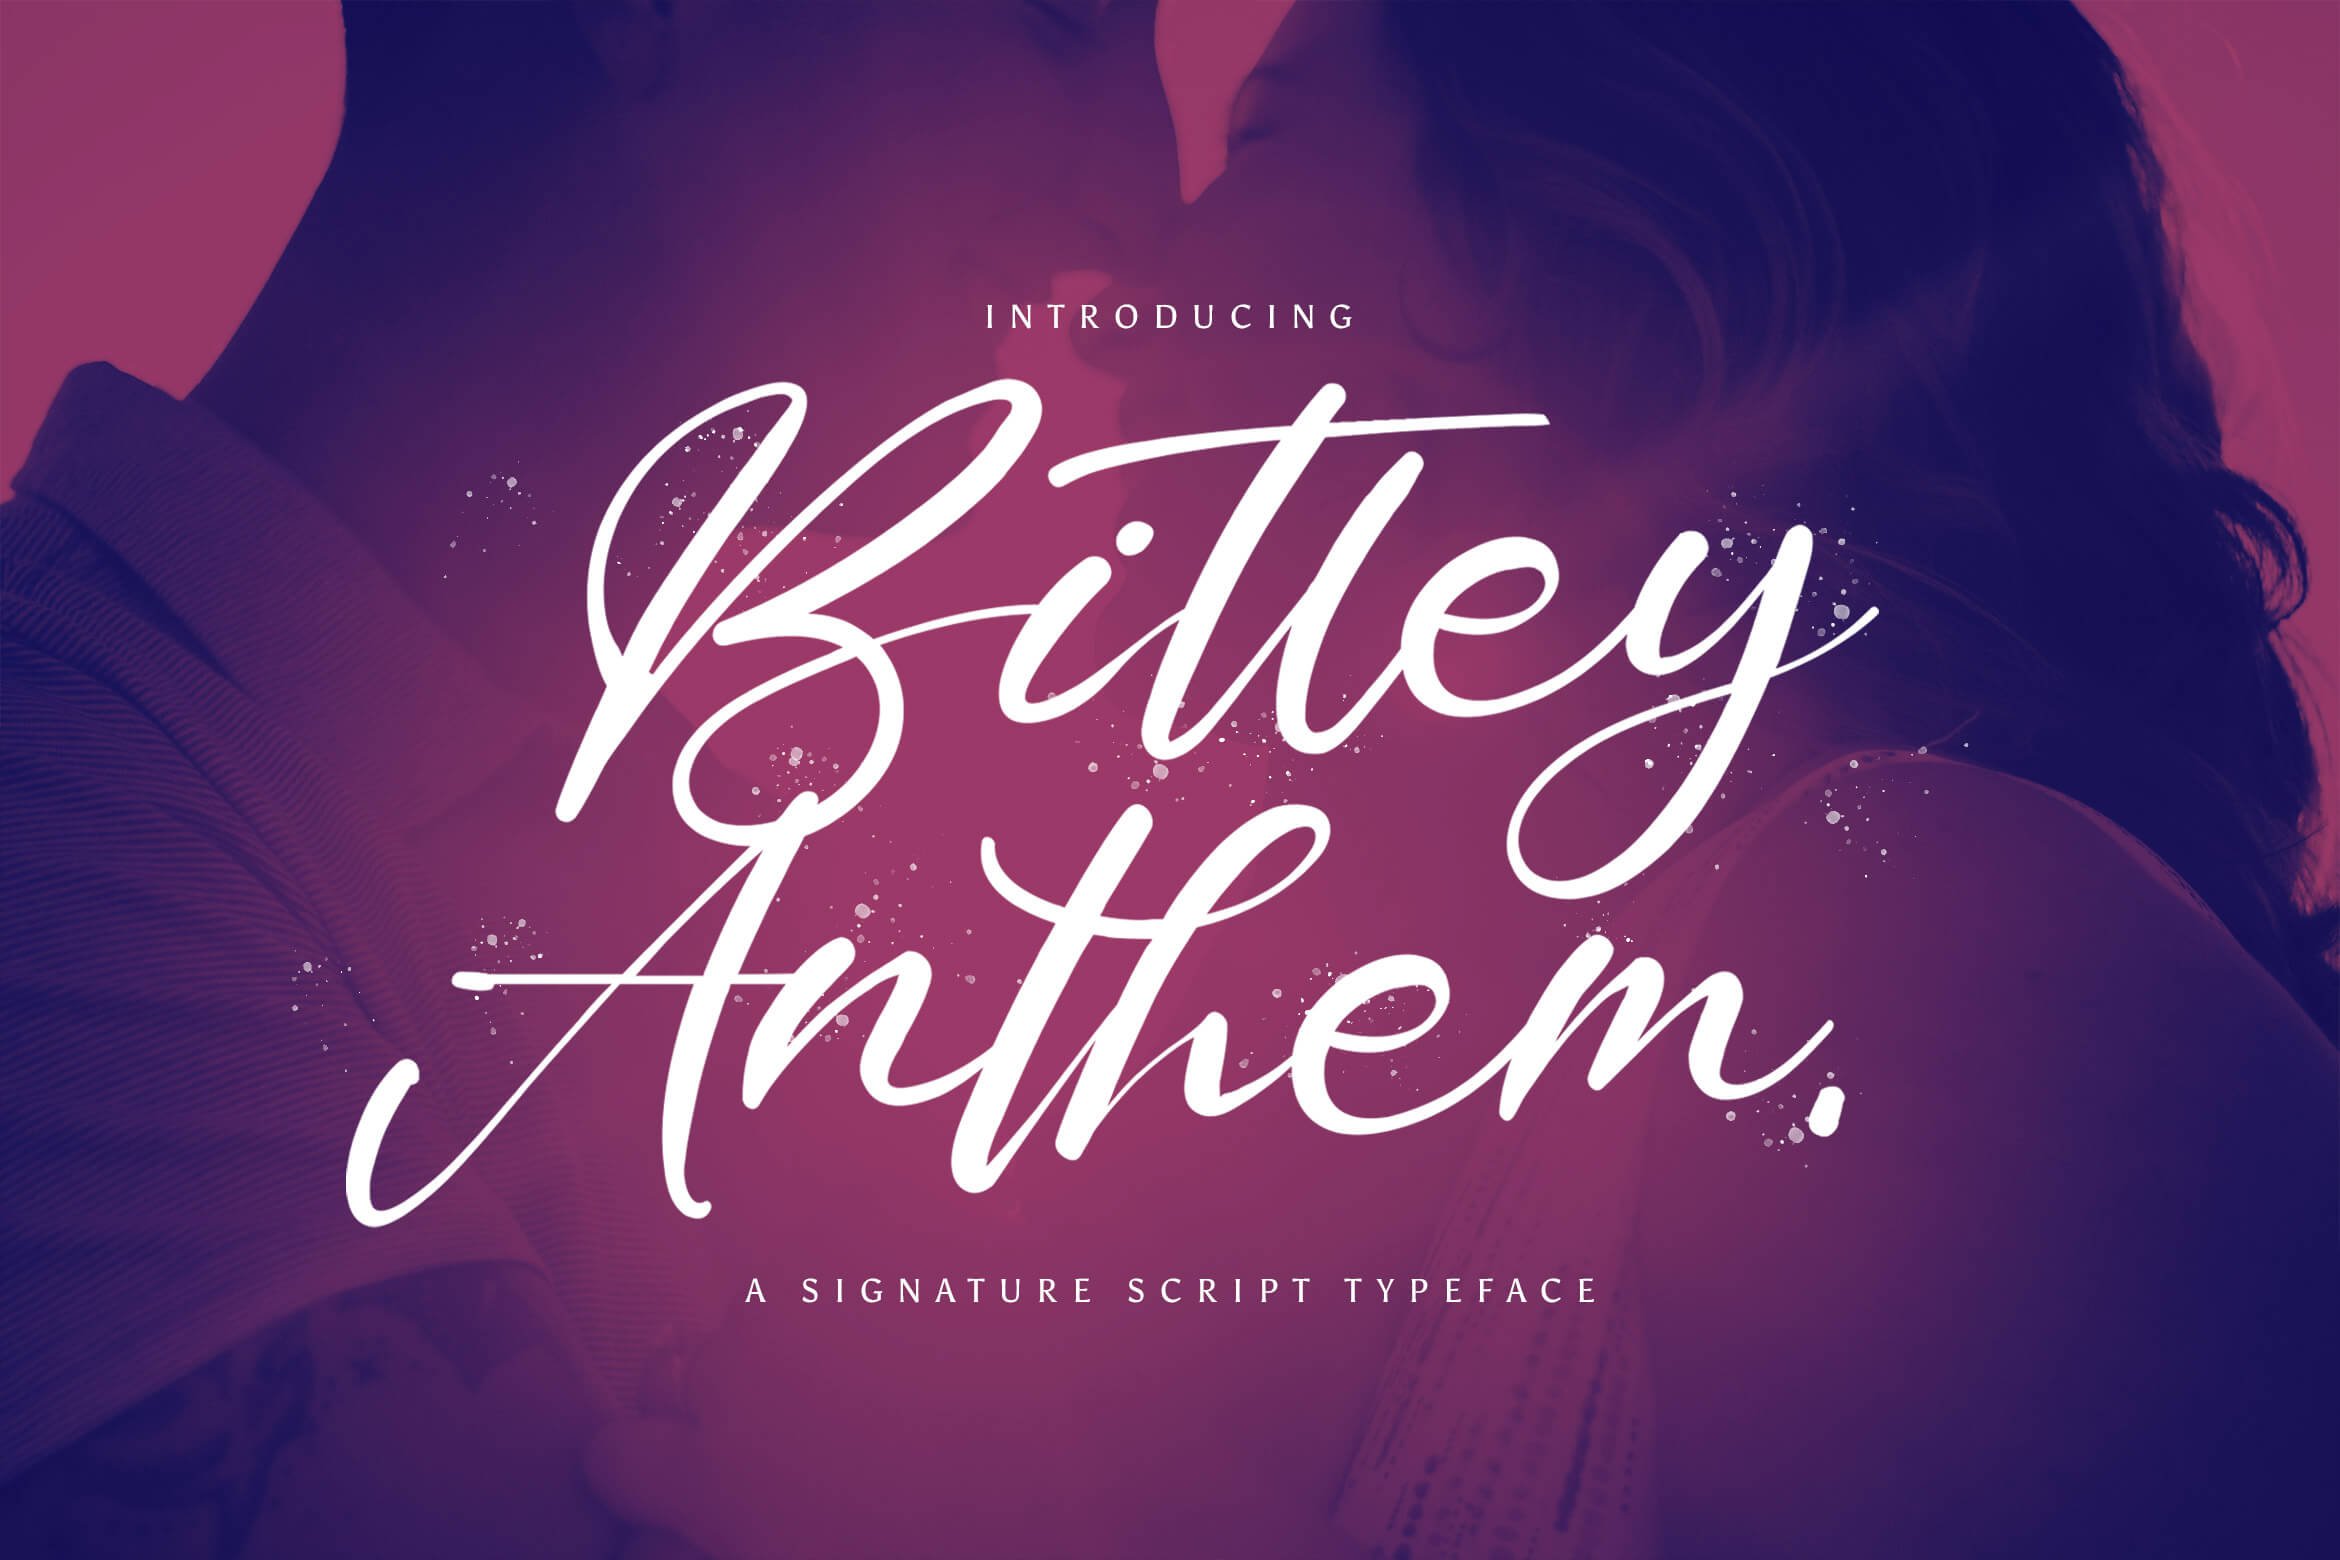 Bitley Anthem - Handwritten Font cover image.